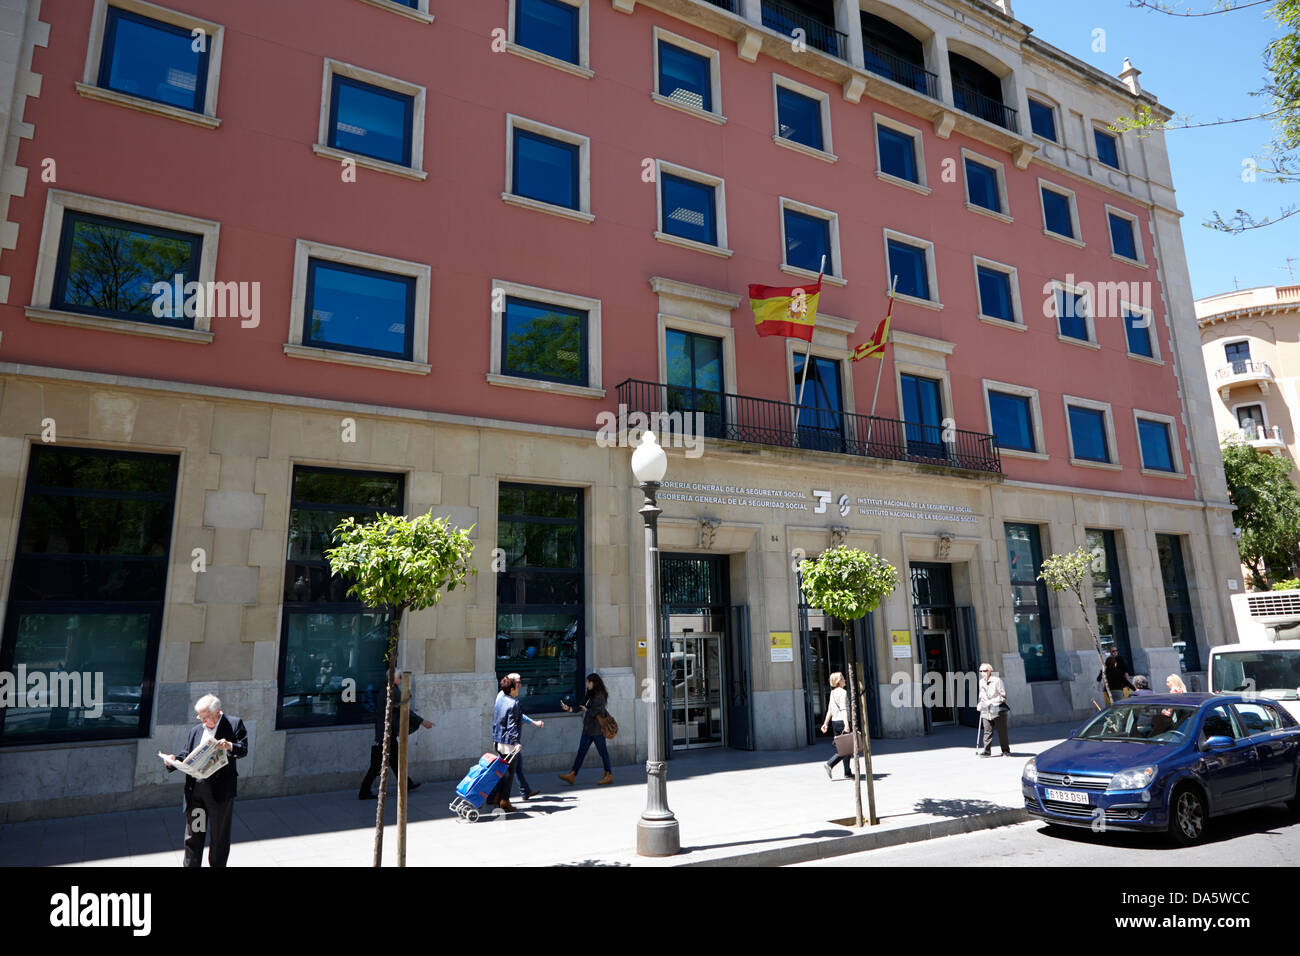 spanish employment and social security ministry building tarragona catalonia spain Stock Photo